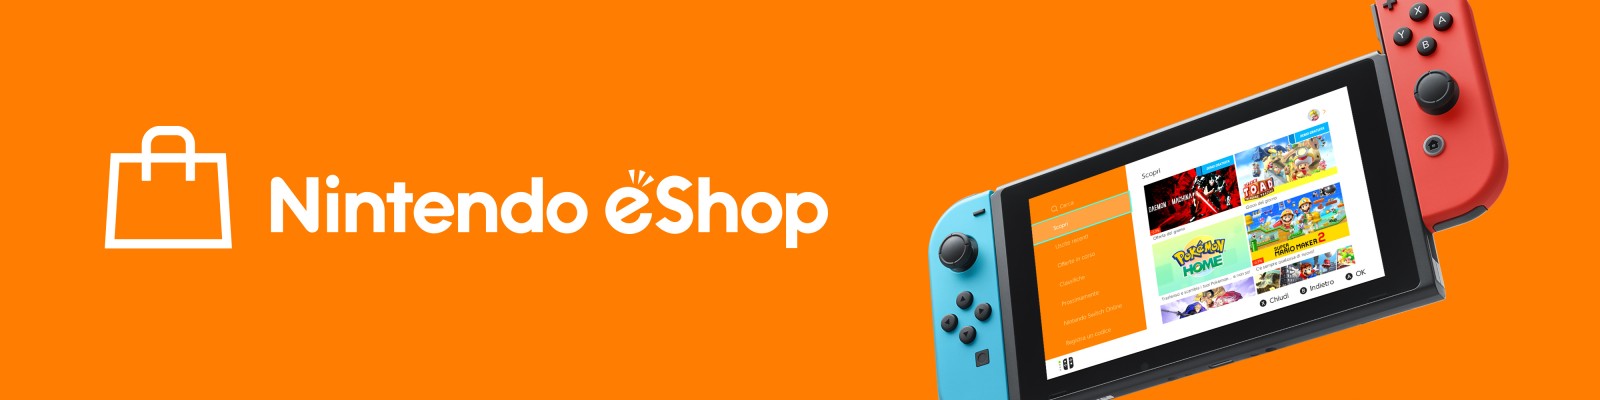 Nintendo eShop | My Nintendo Store 